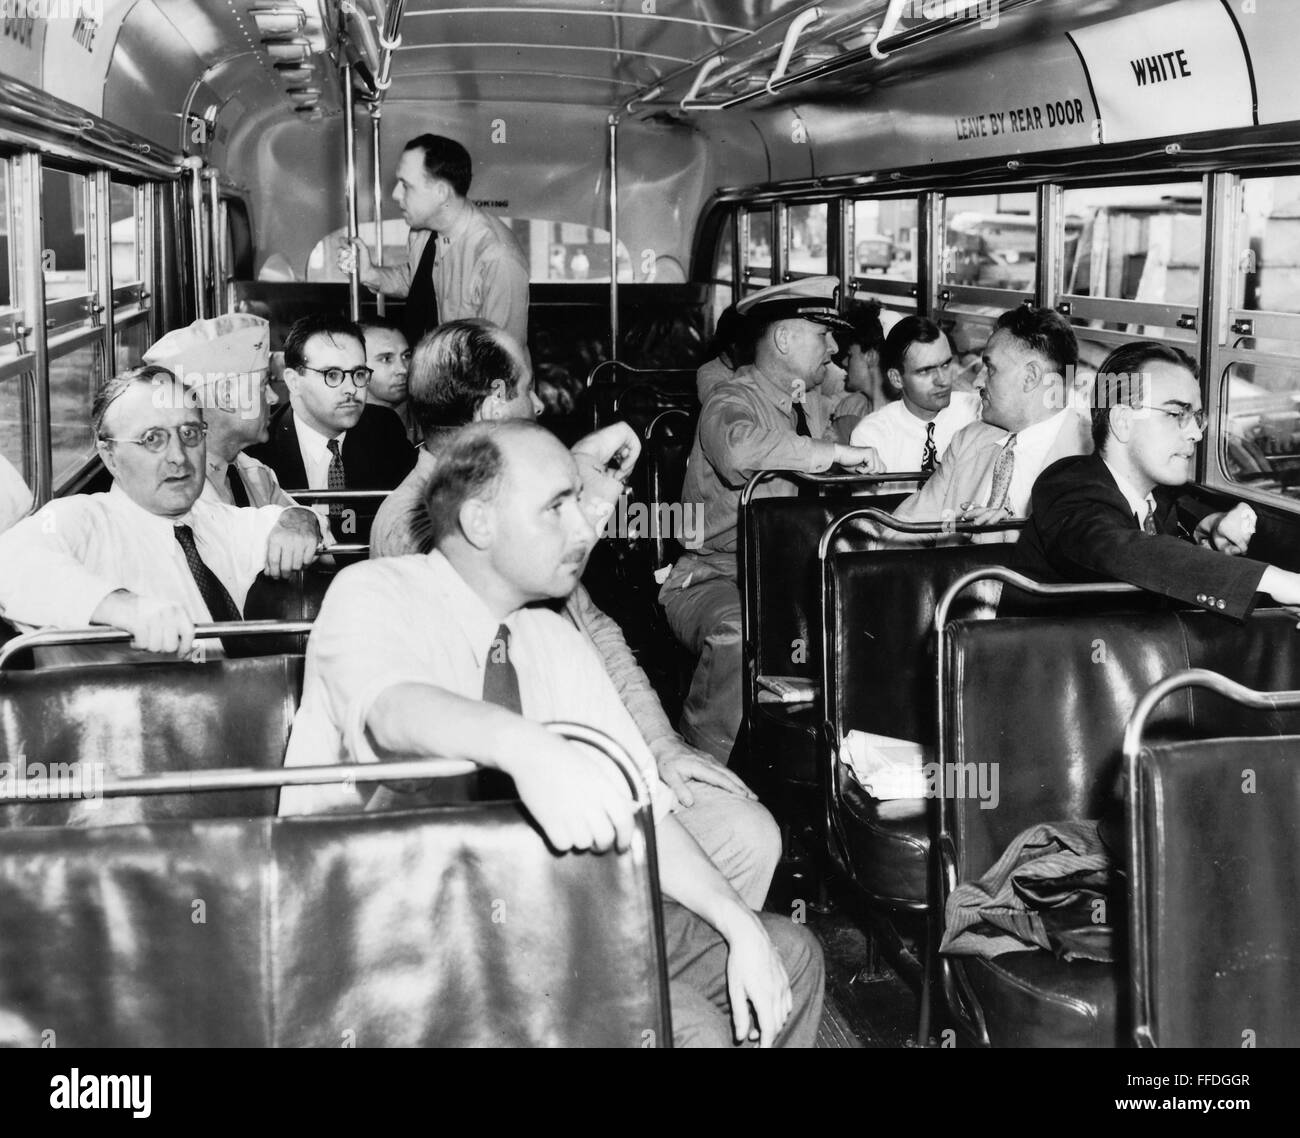 SEGREGATED BUS. /nInterior of a segregated bus, mid-20th century. Stock Photo